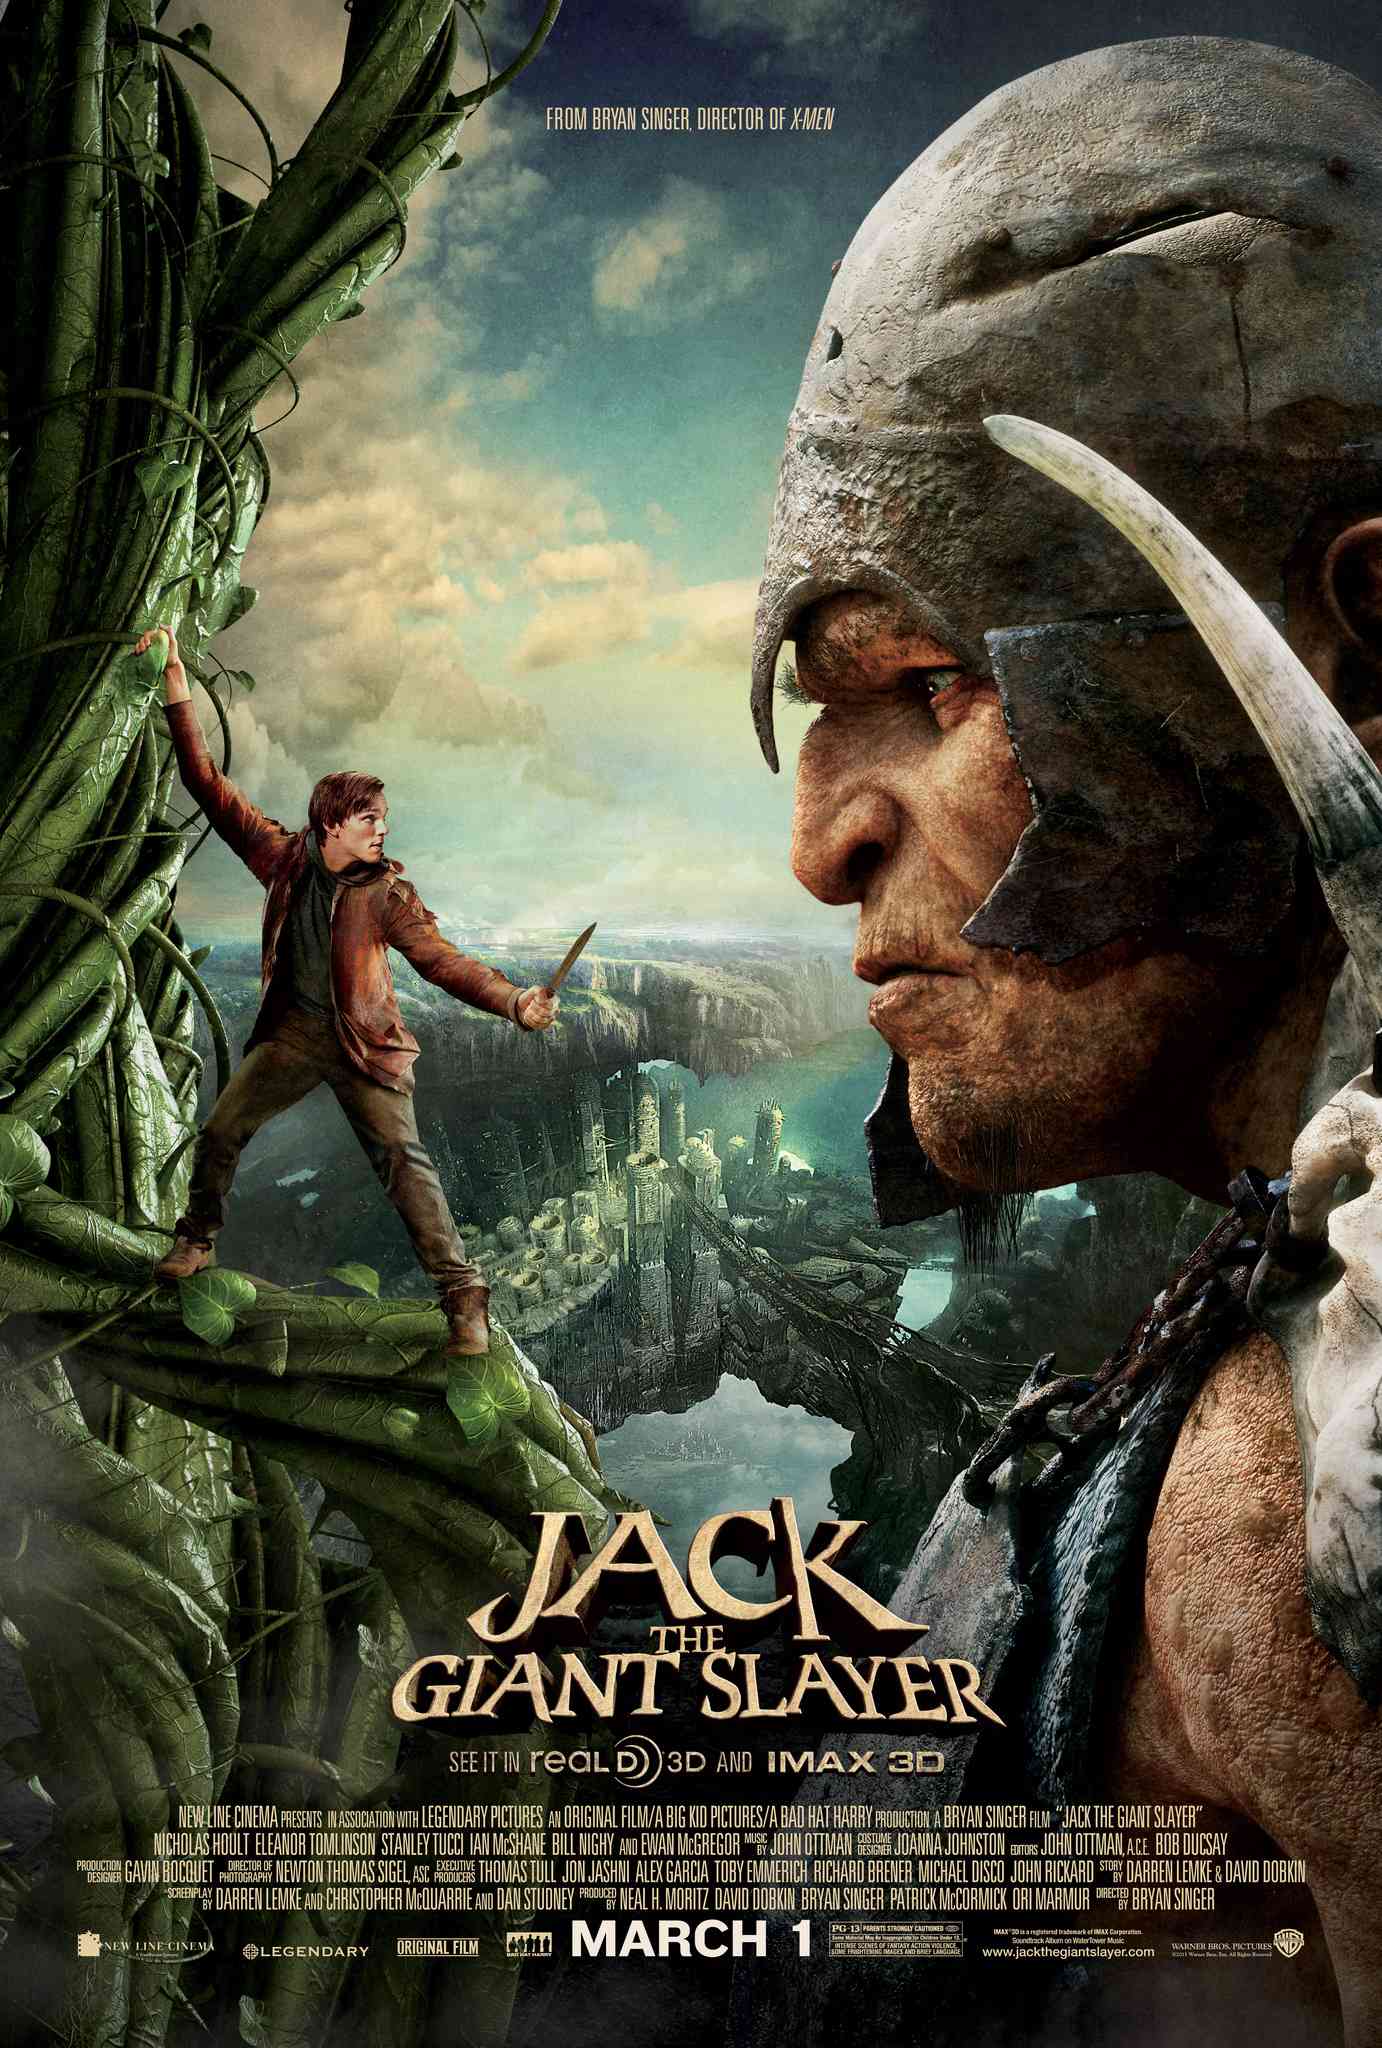 FULL MOVIE: Jack The Giant Slayer (2013) [Adventure]